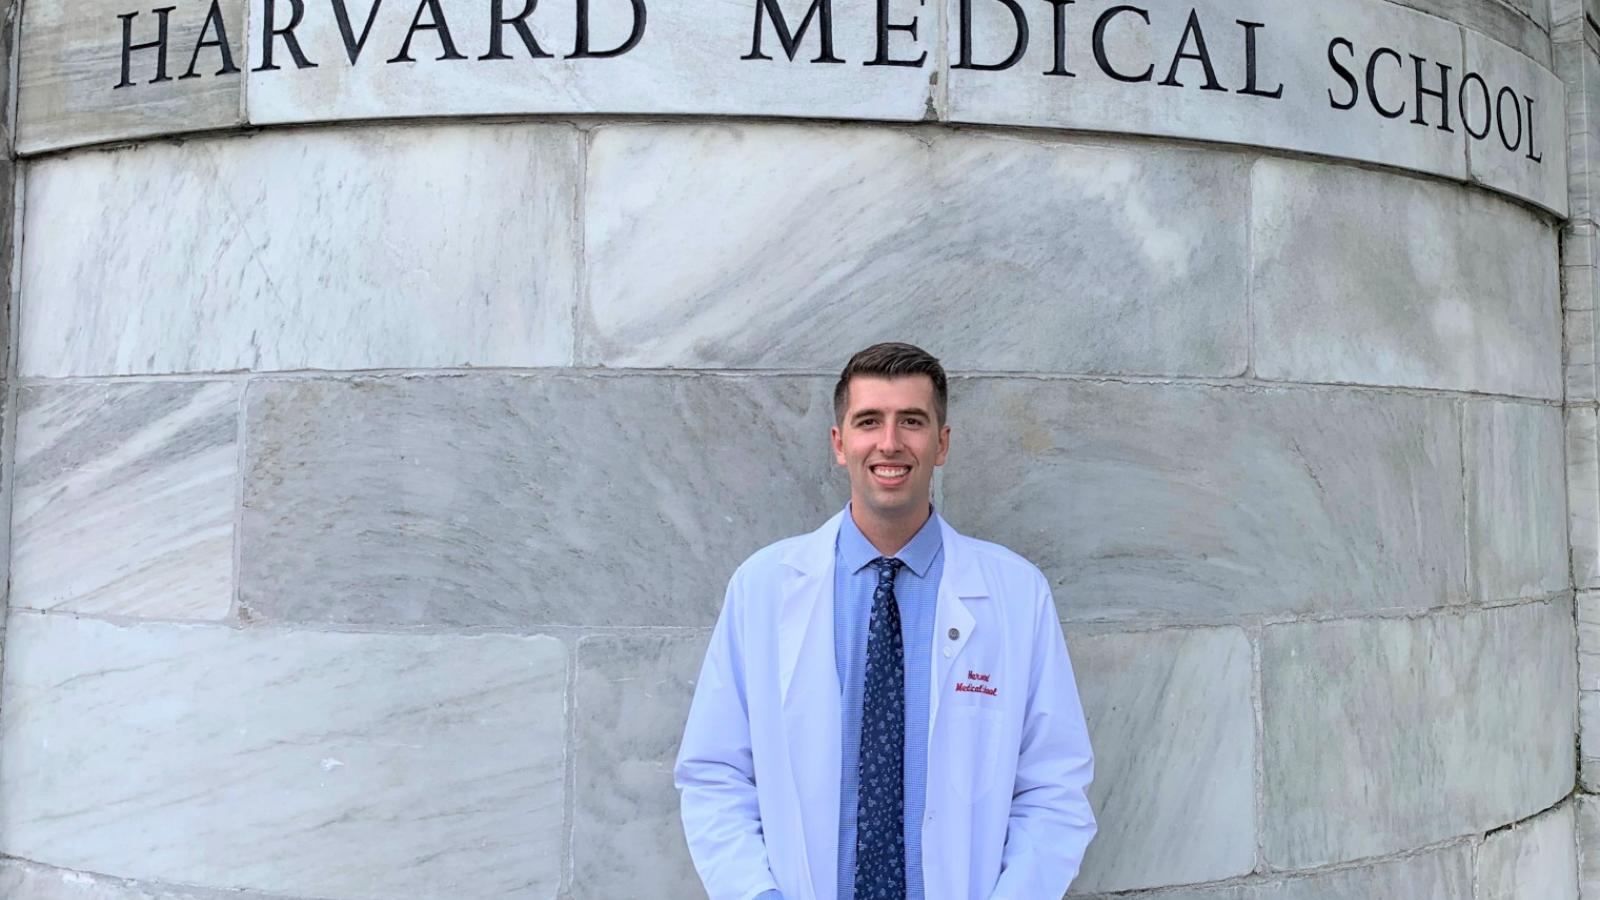 Grant Steele in front of Harvard Medical School